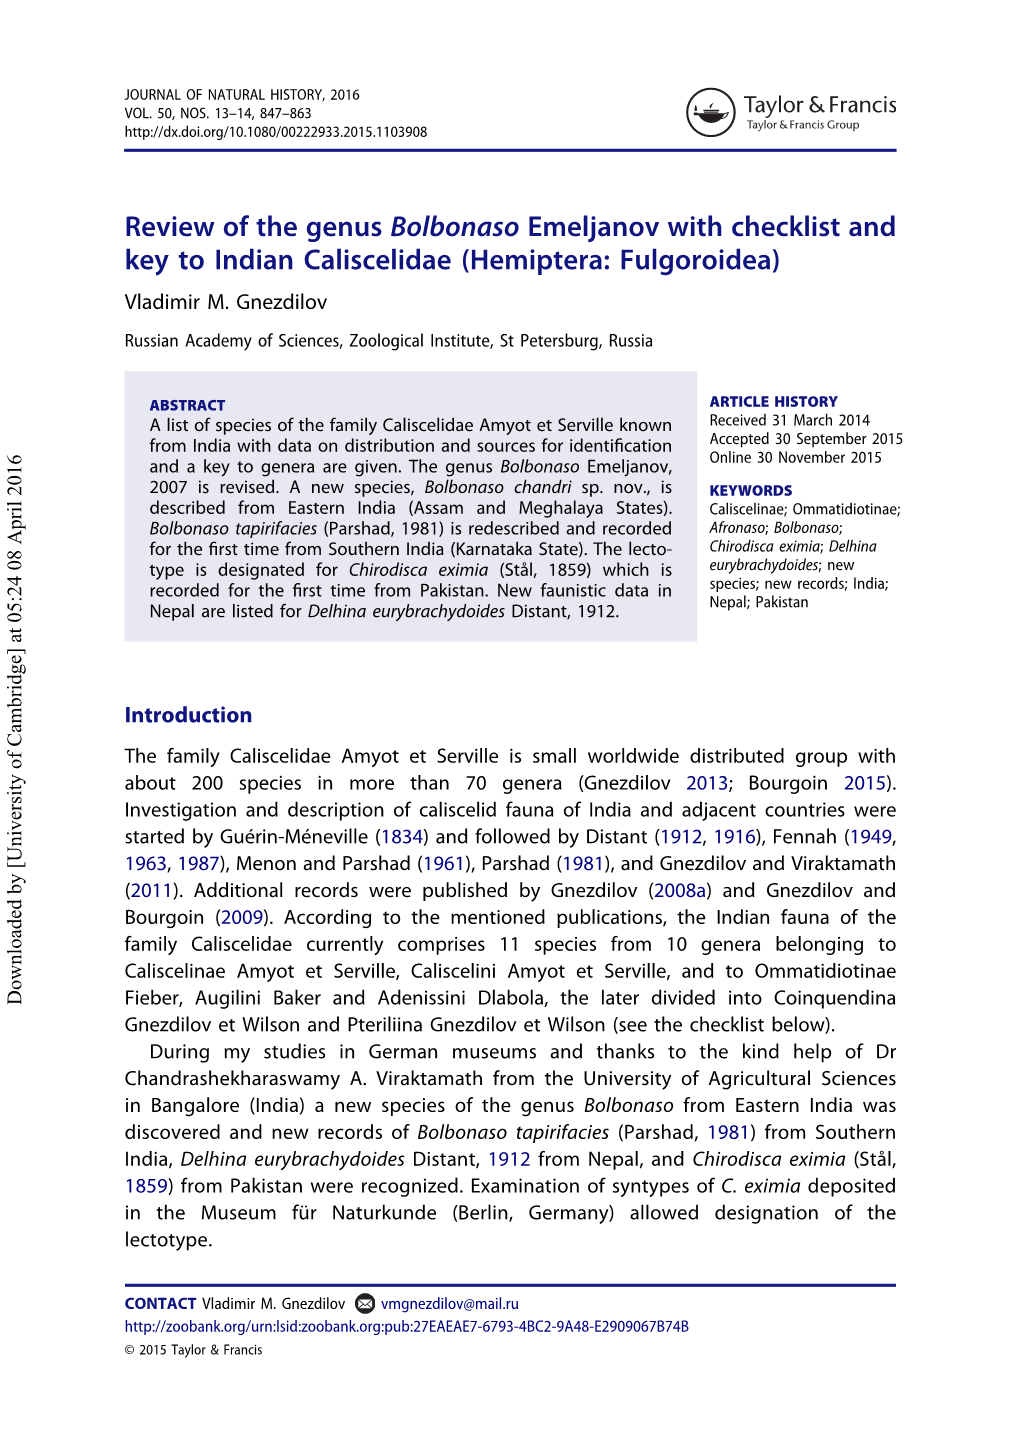 Review of the Genus Bolbonaso Emeljanov with Checklist and Key to Indian Caliscelidae (Hemiptera: Fulgoroidea) Vladimir M